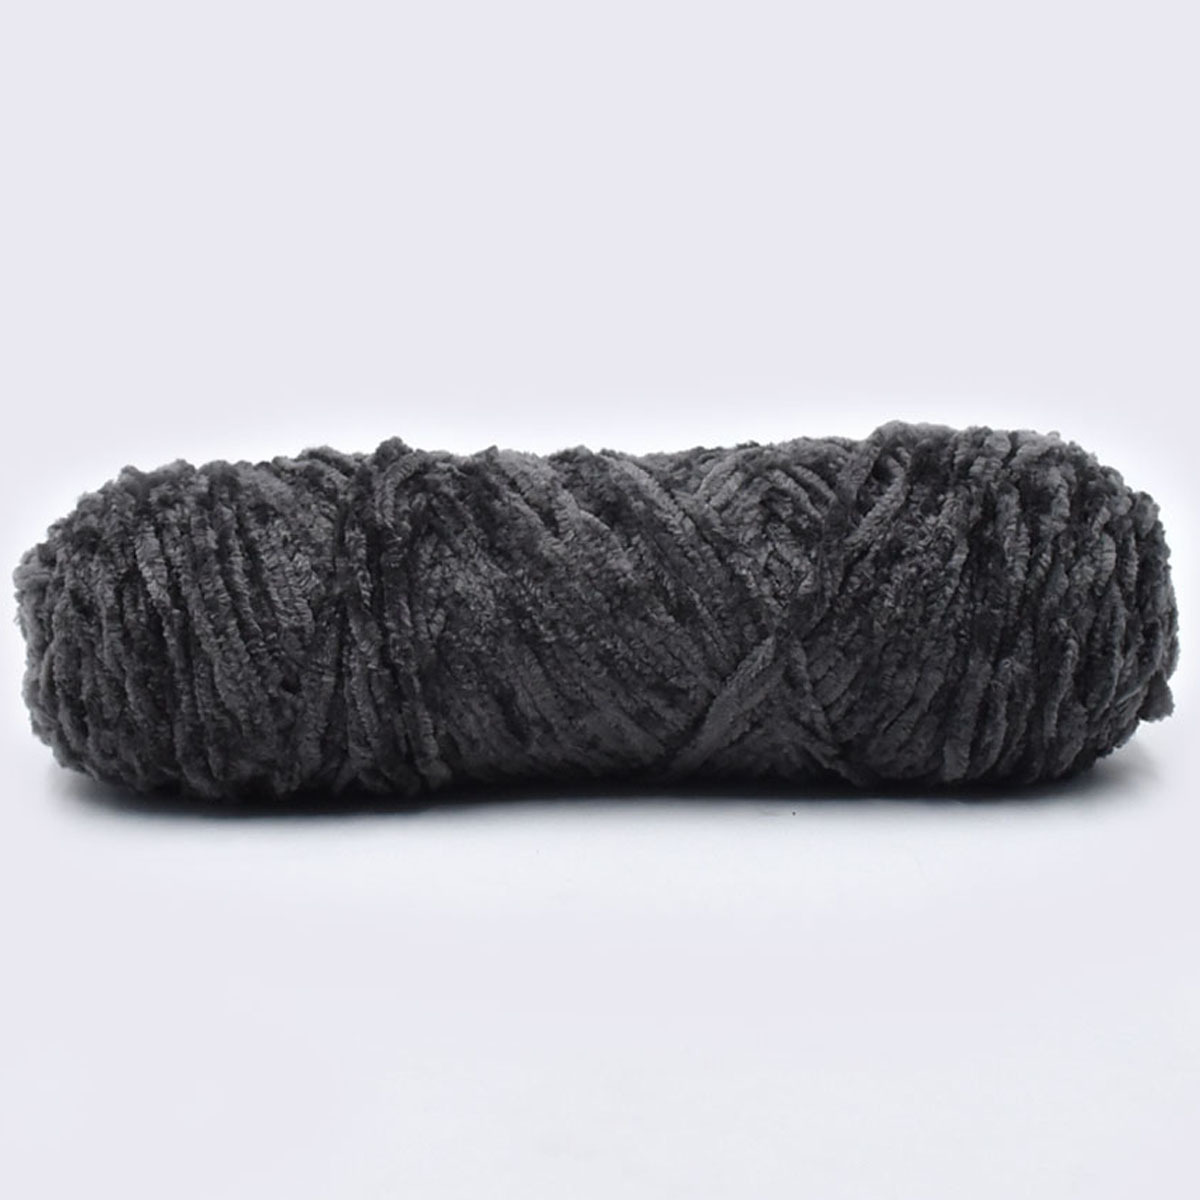 Chunky Knit Chenille Yarn Soft Velvet Yarn Crochet Knitting Blanket Yarn DIY Craft for Knit Sweaters, Blankets, Shoes, Scarves, Clothes, Black